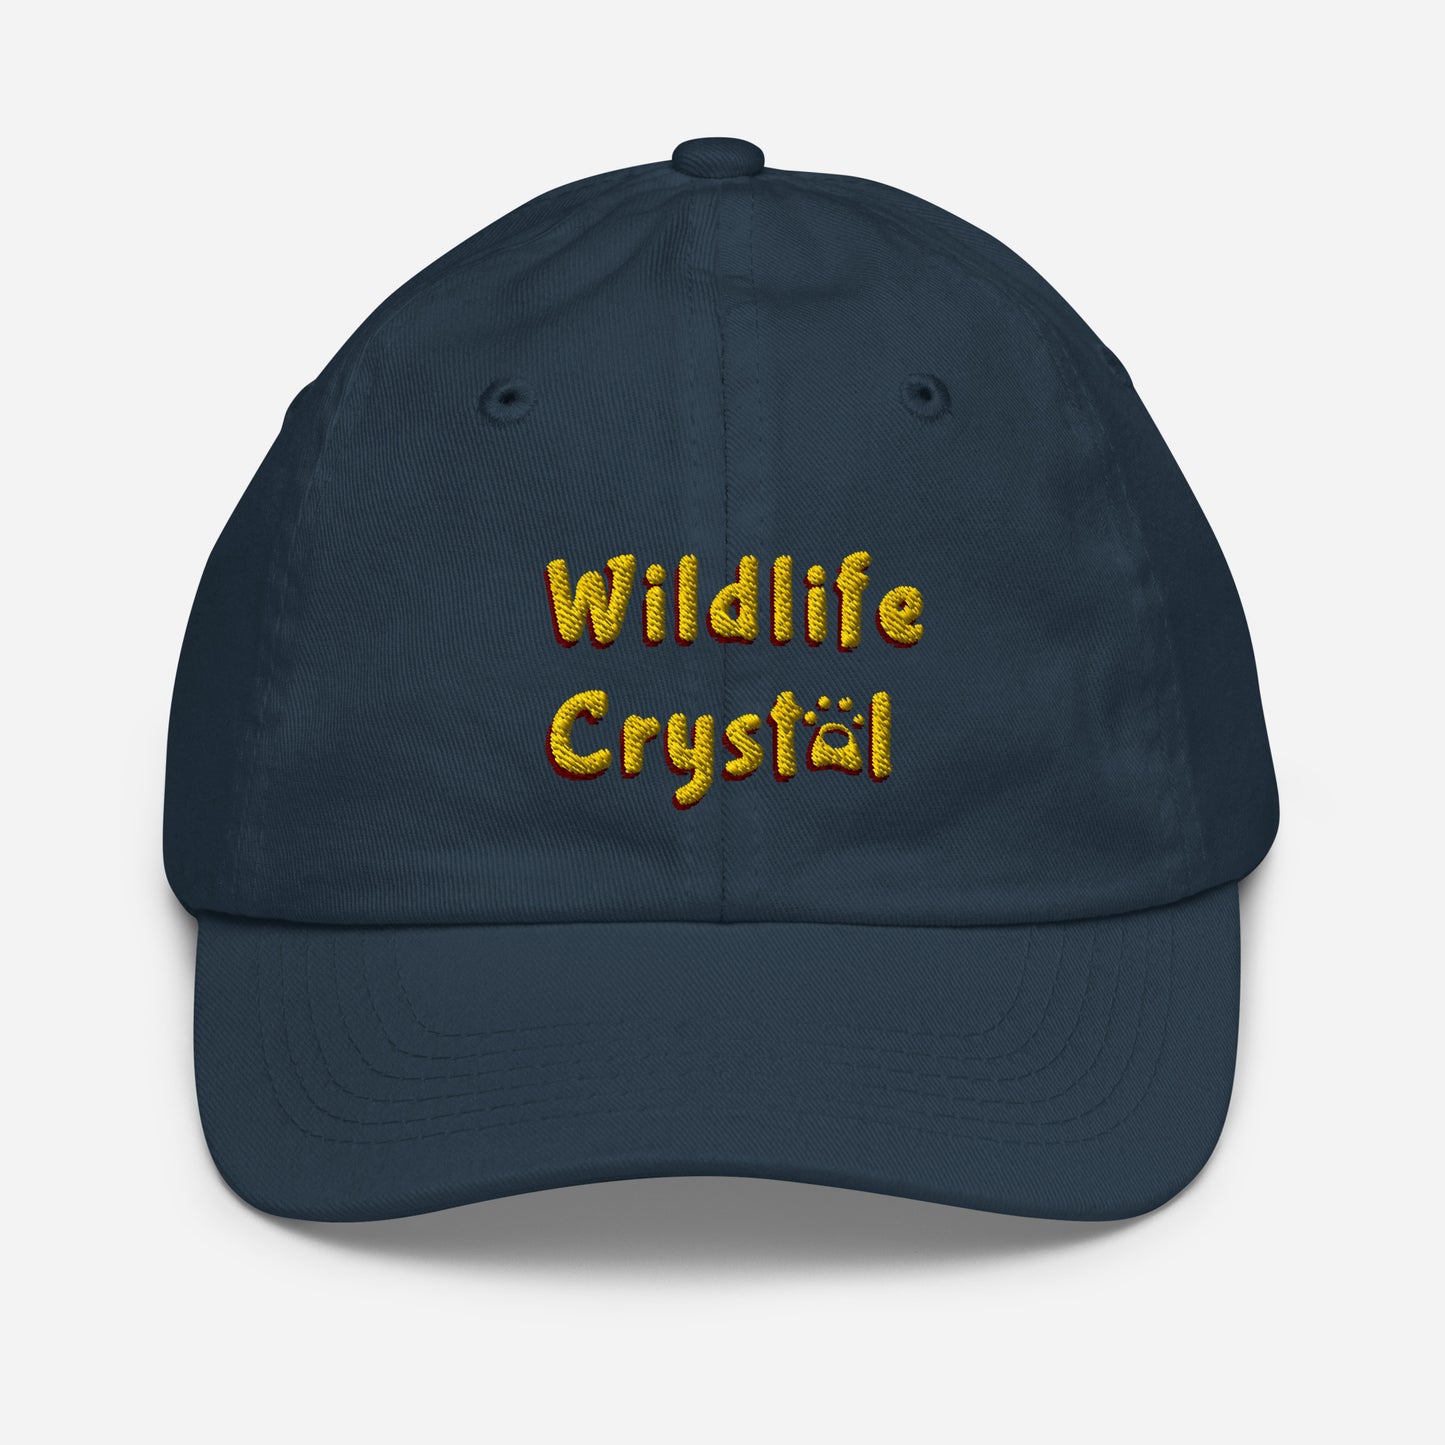 Wildlife Crystal Youth Baseball Cap